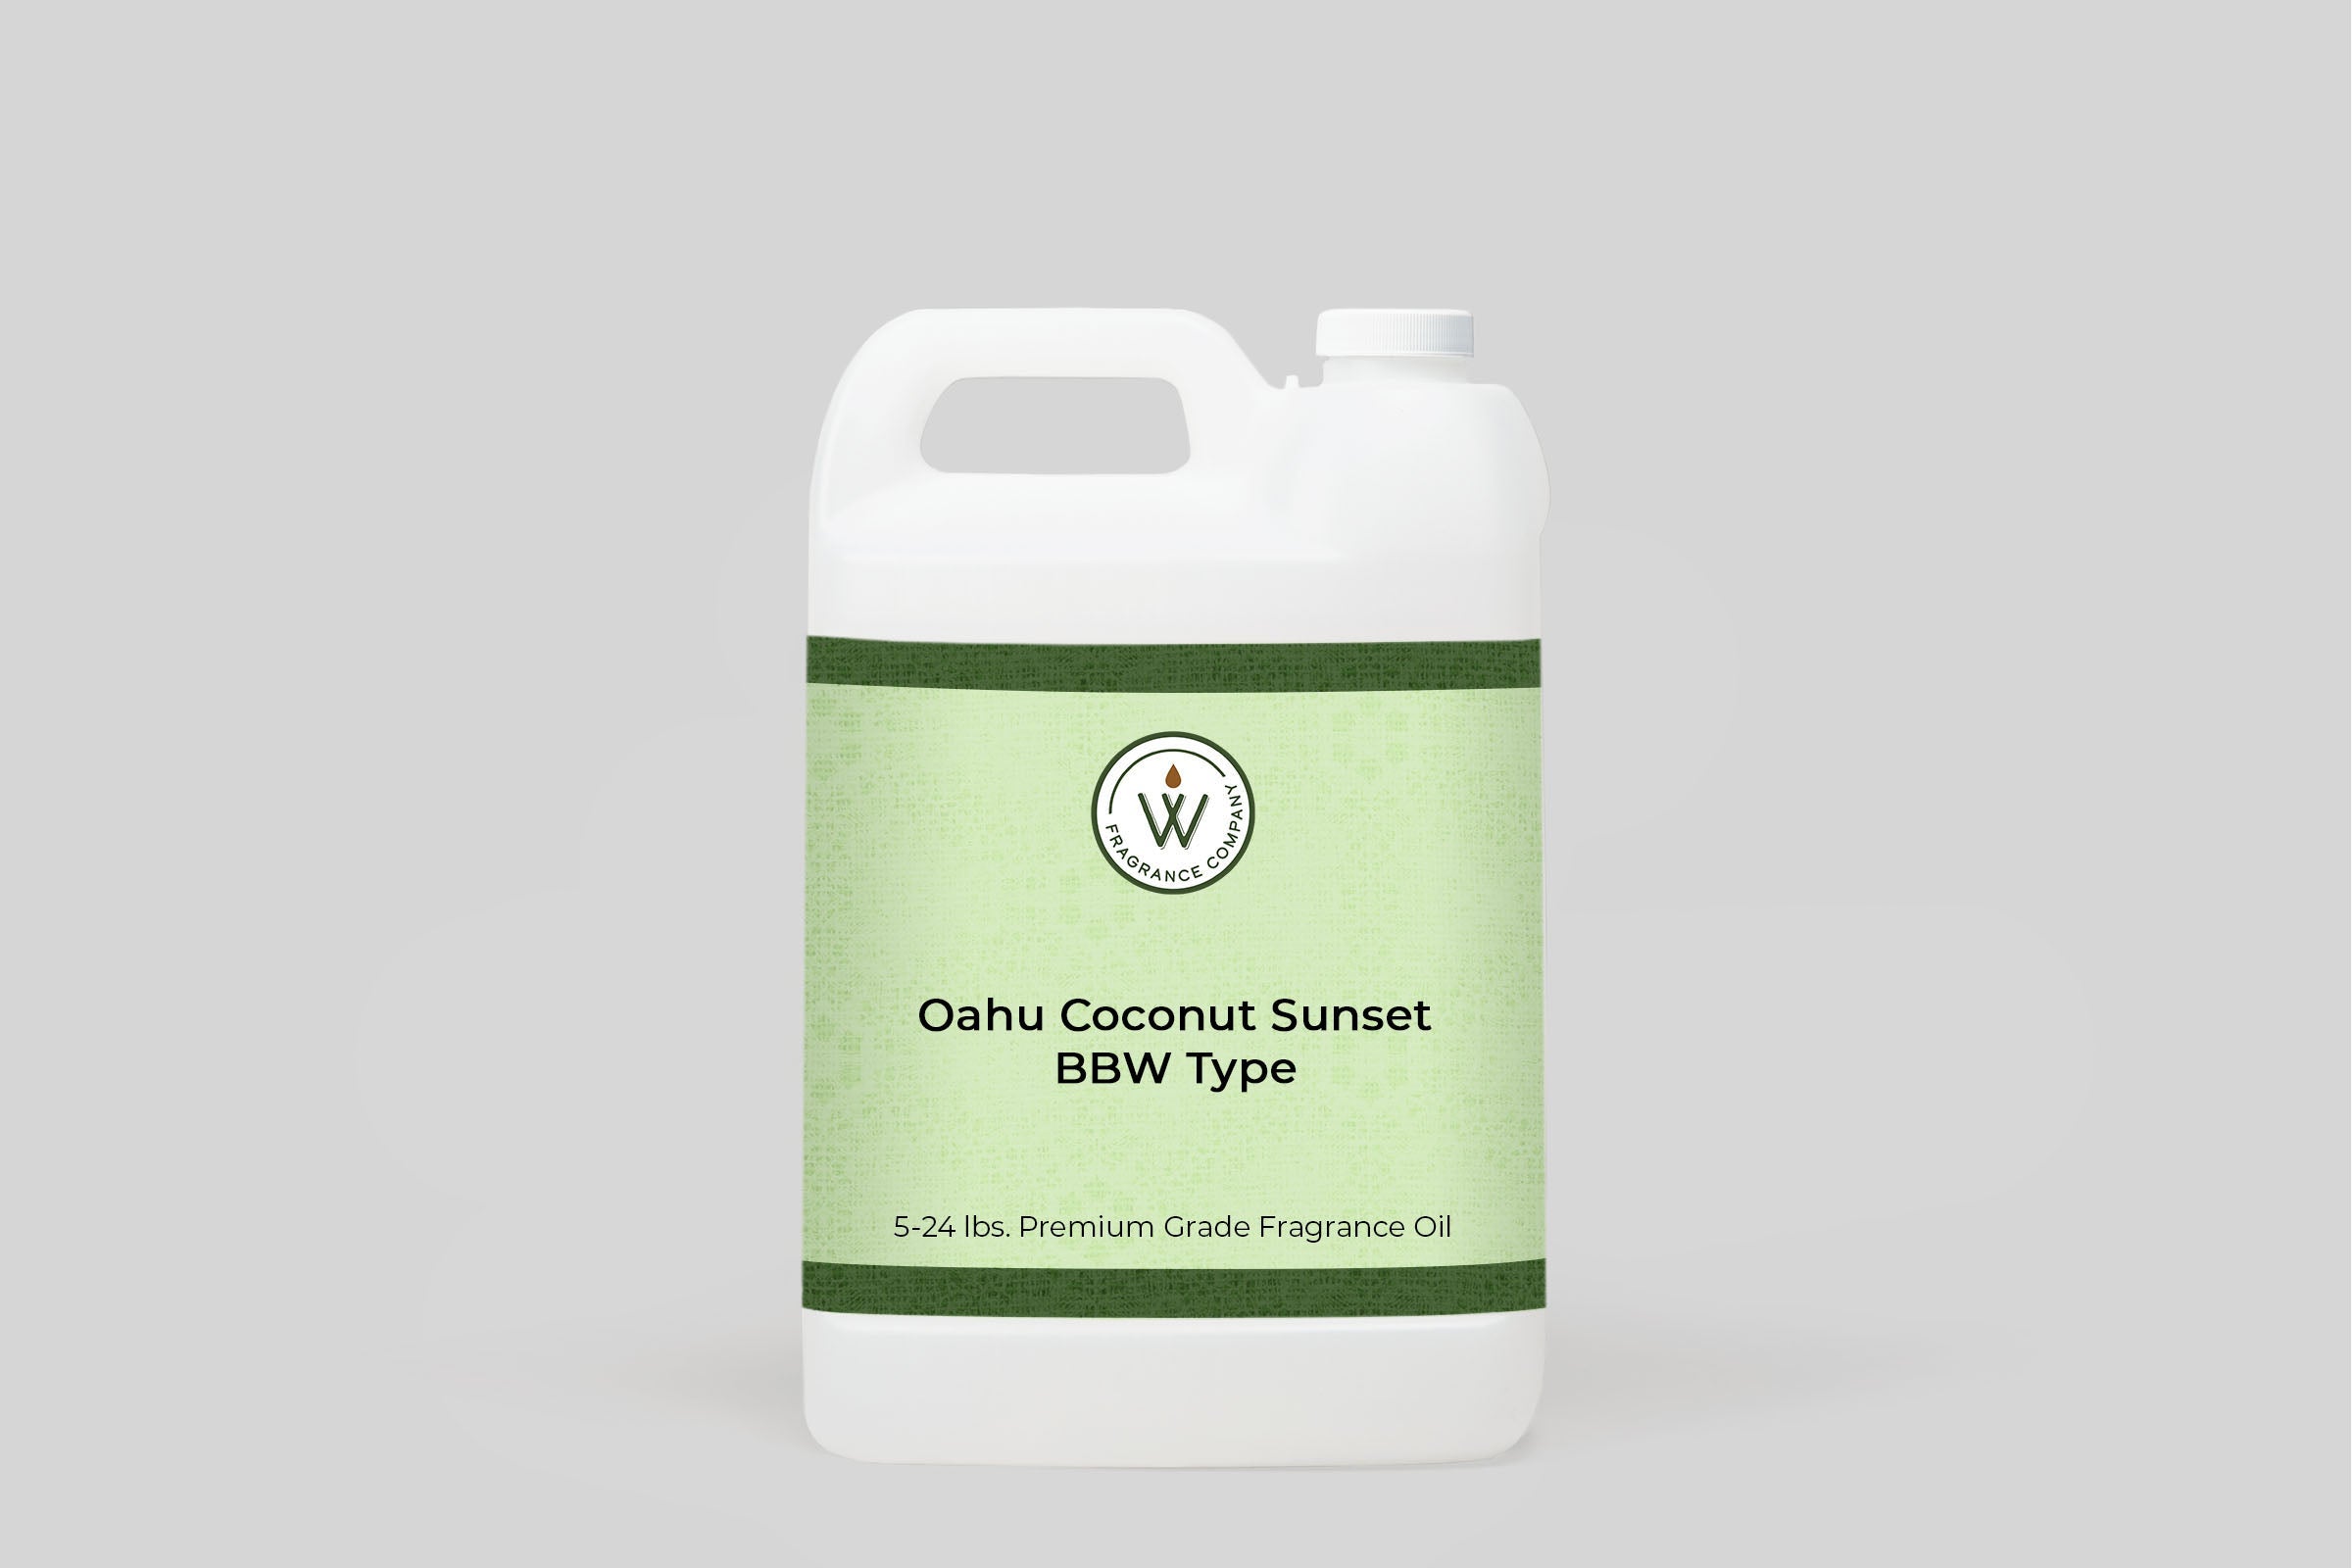 Oahu Coconut Sunset BBW Type Fragrance Oil